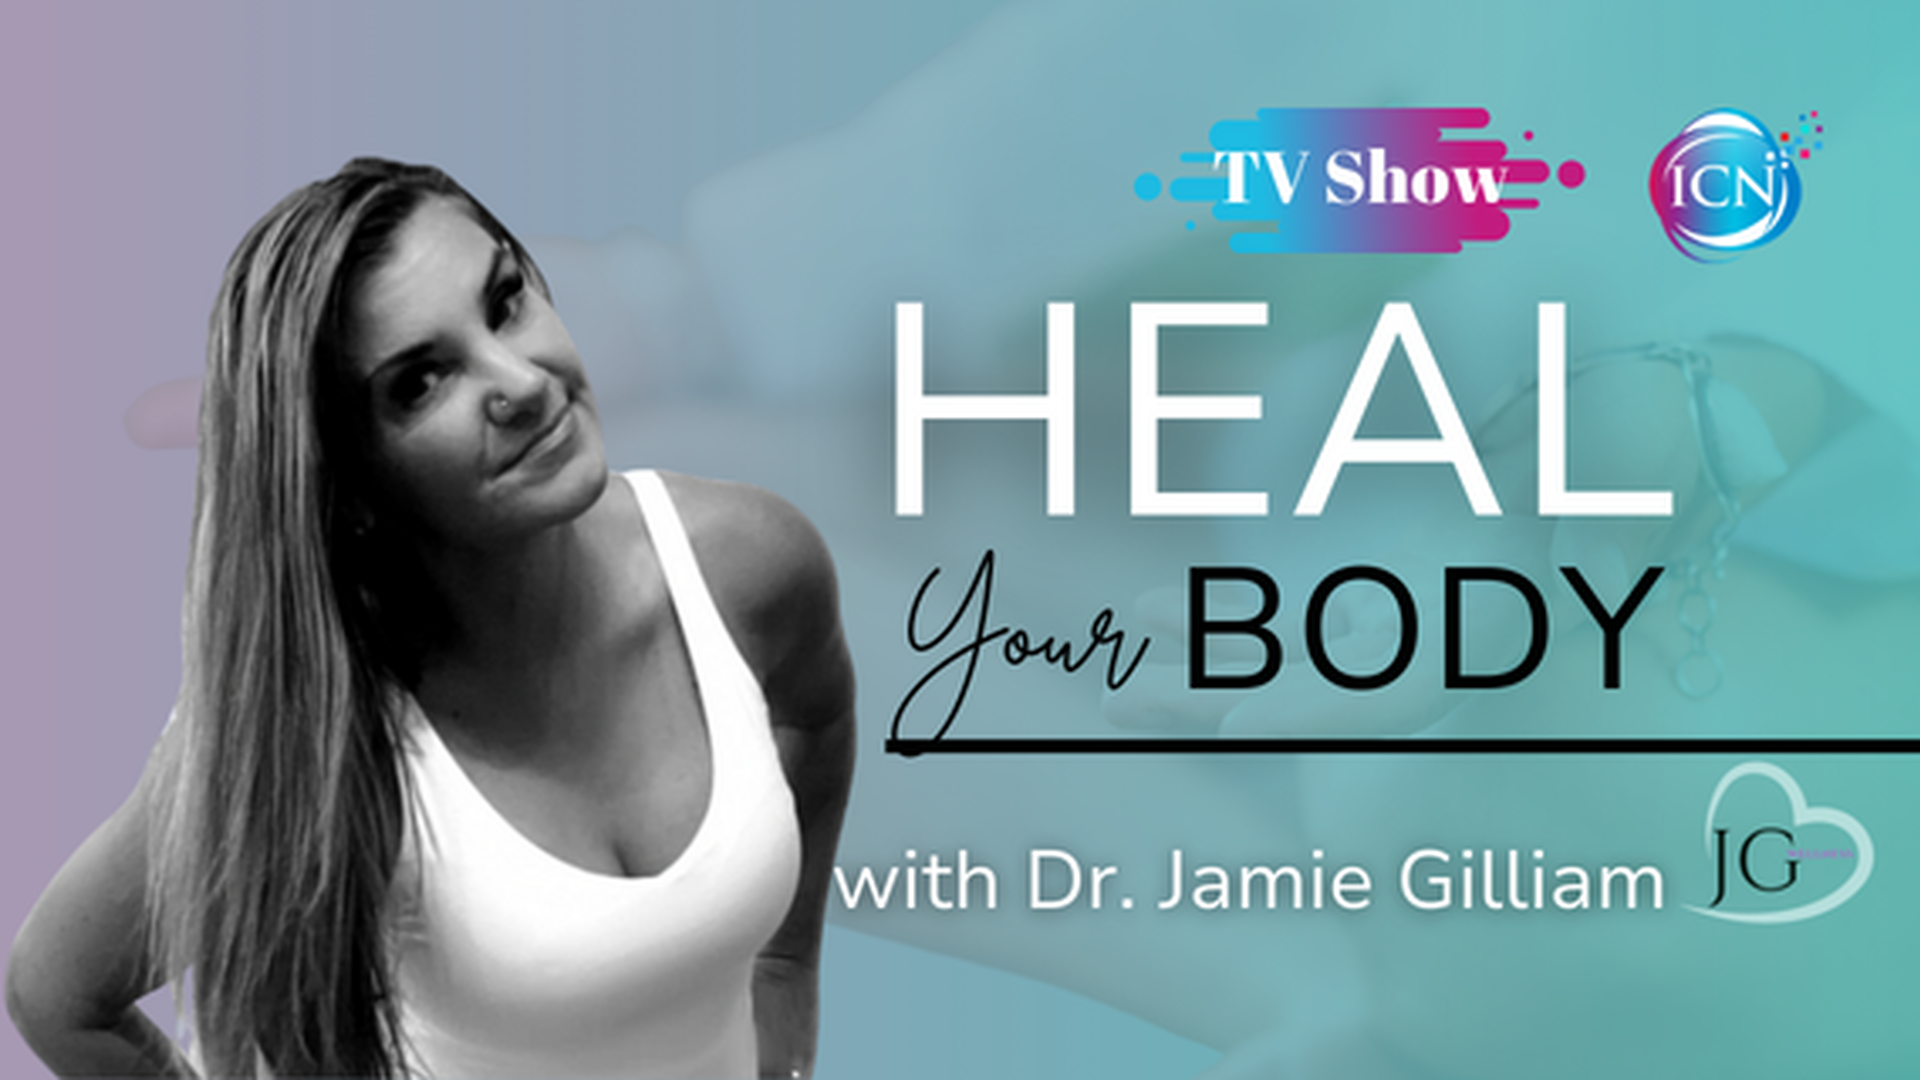 Shrink Stubborn Belly Fat - Dr. Jamie Gilliam